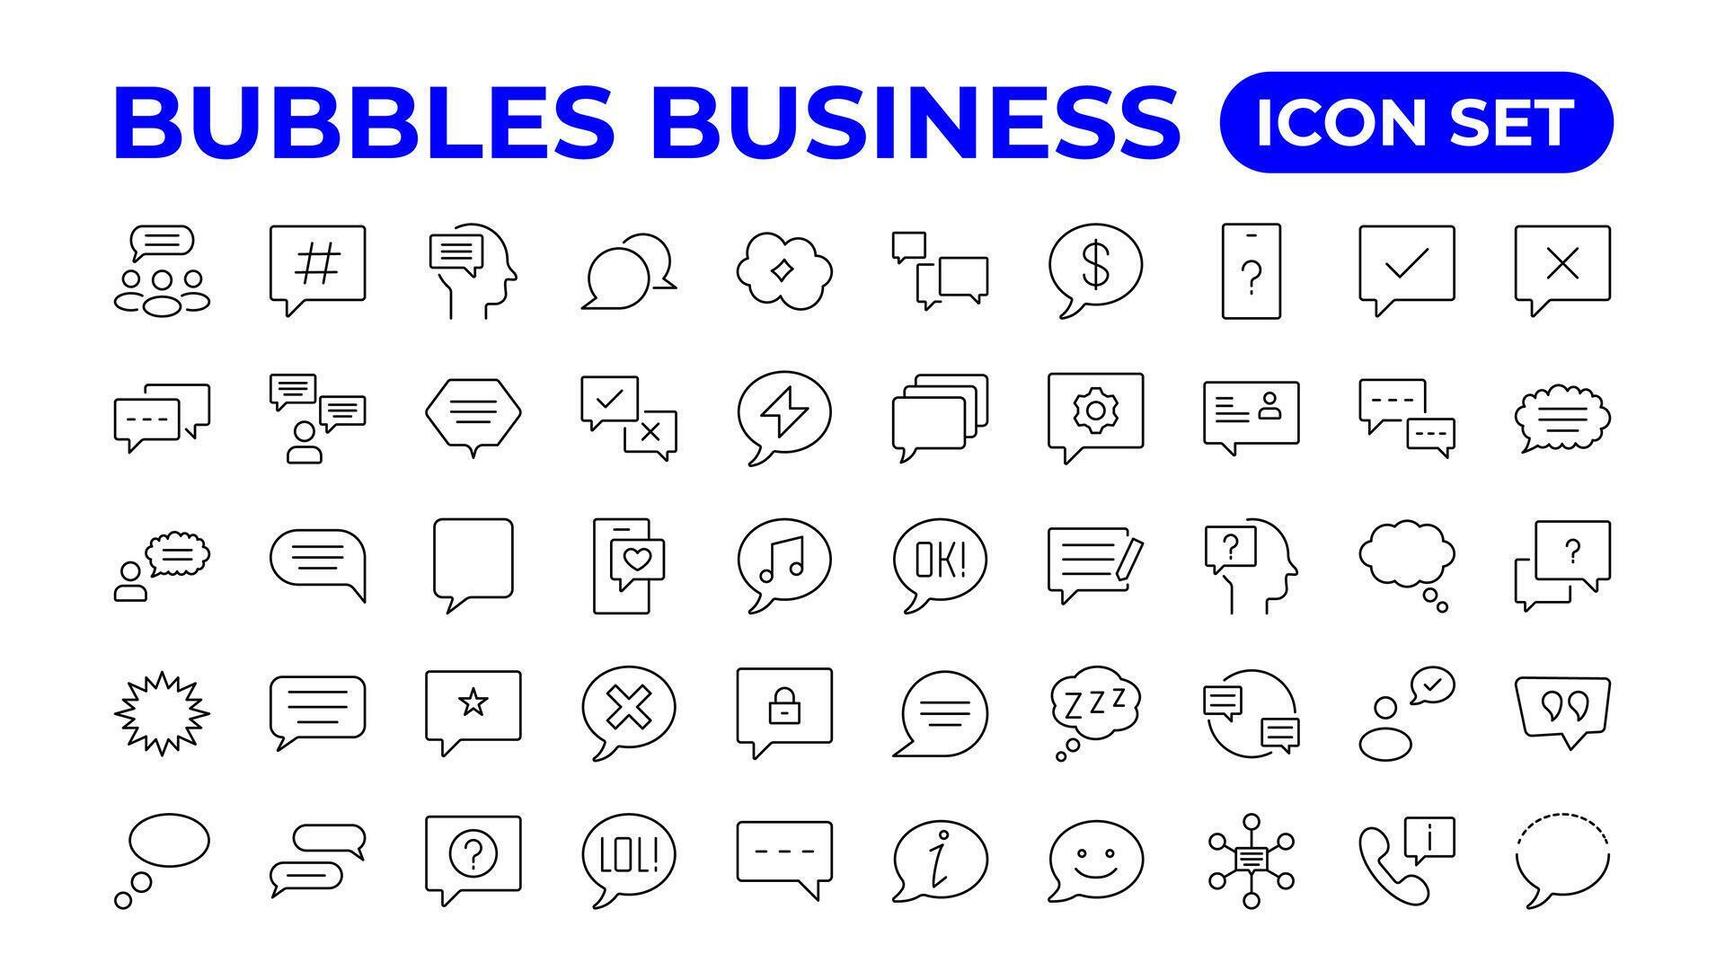 Speech bubbles icon set.Bubbles Business icon.Outline icon collection. vector